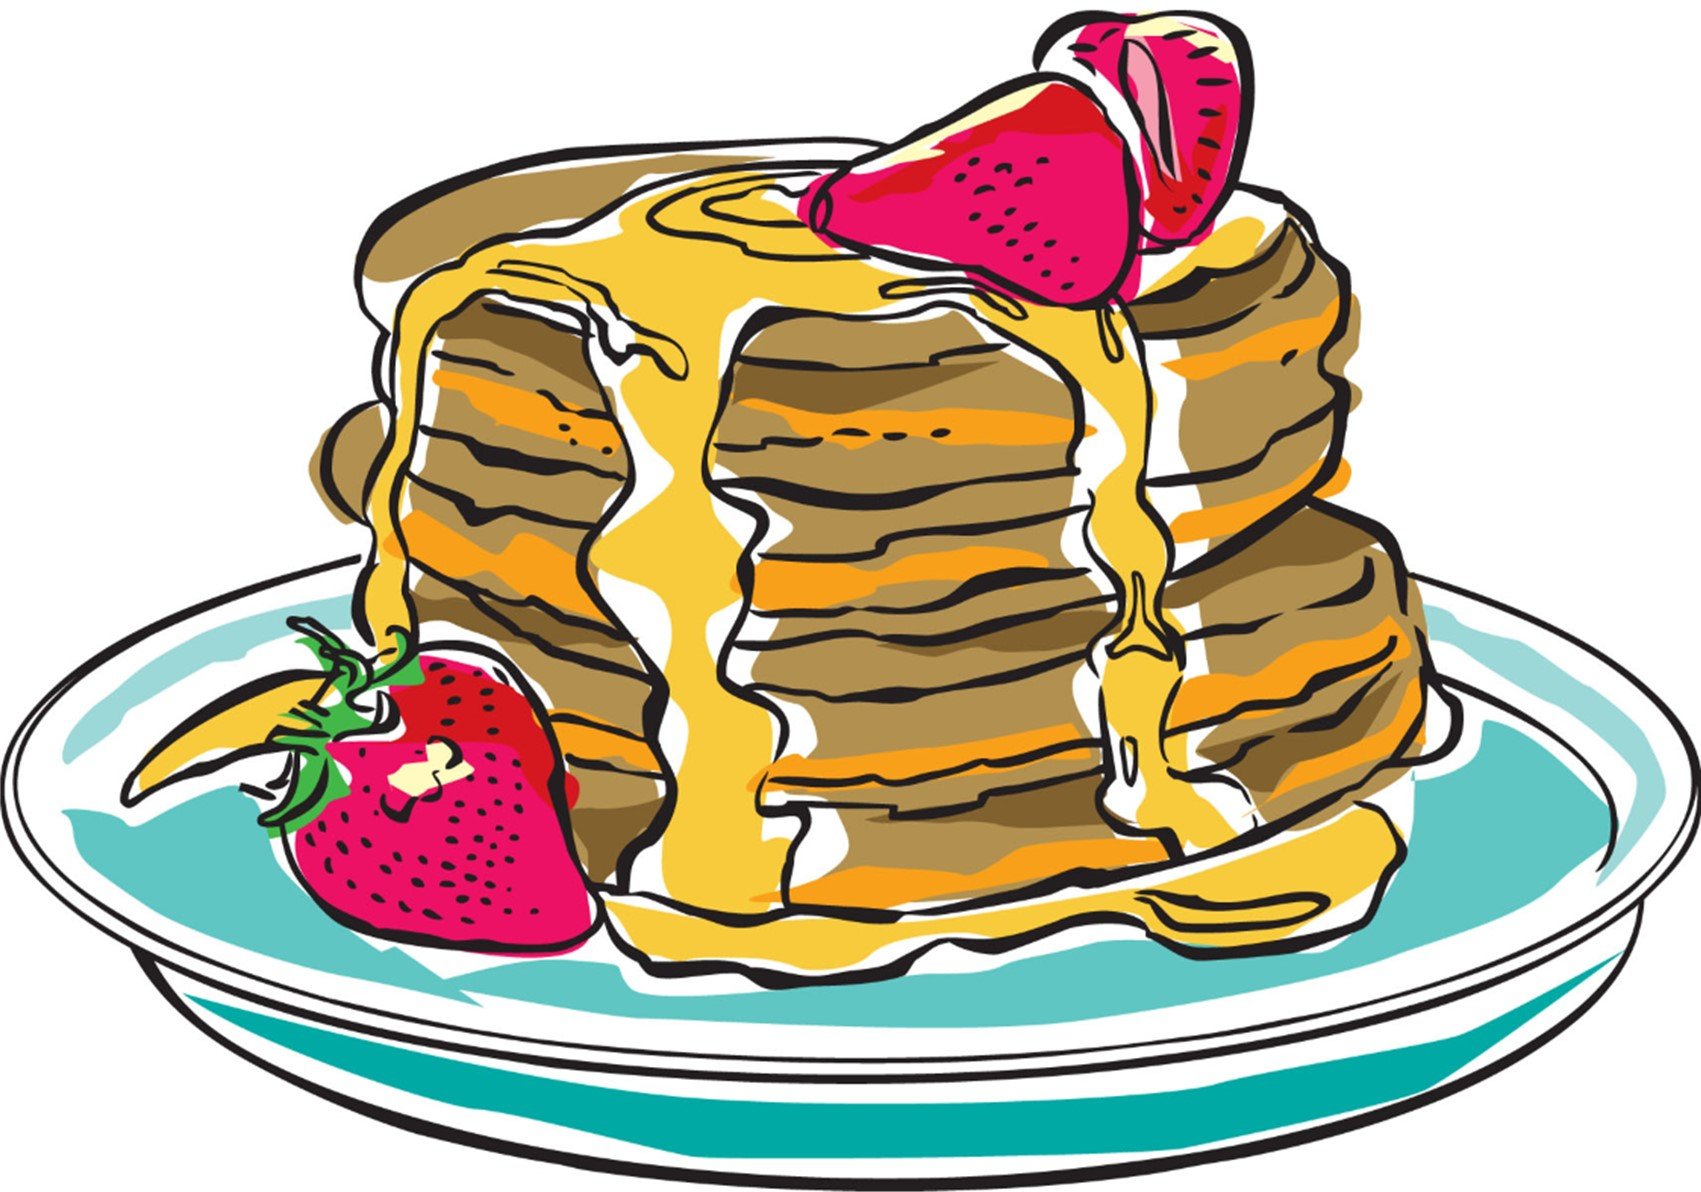 Pile o' Pancakes